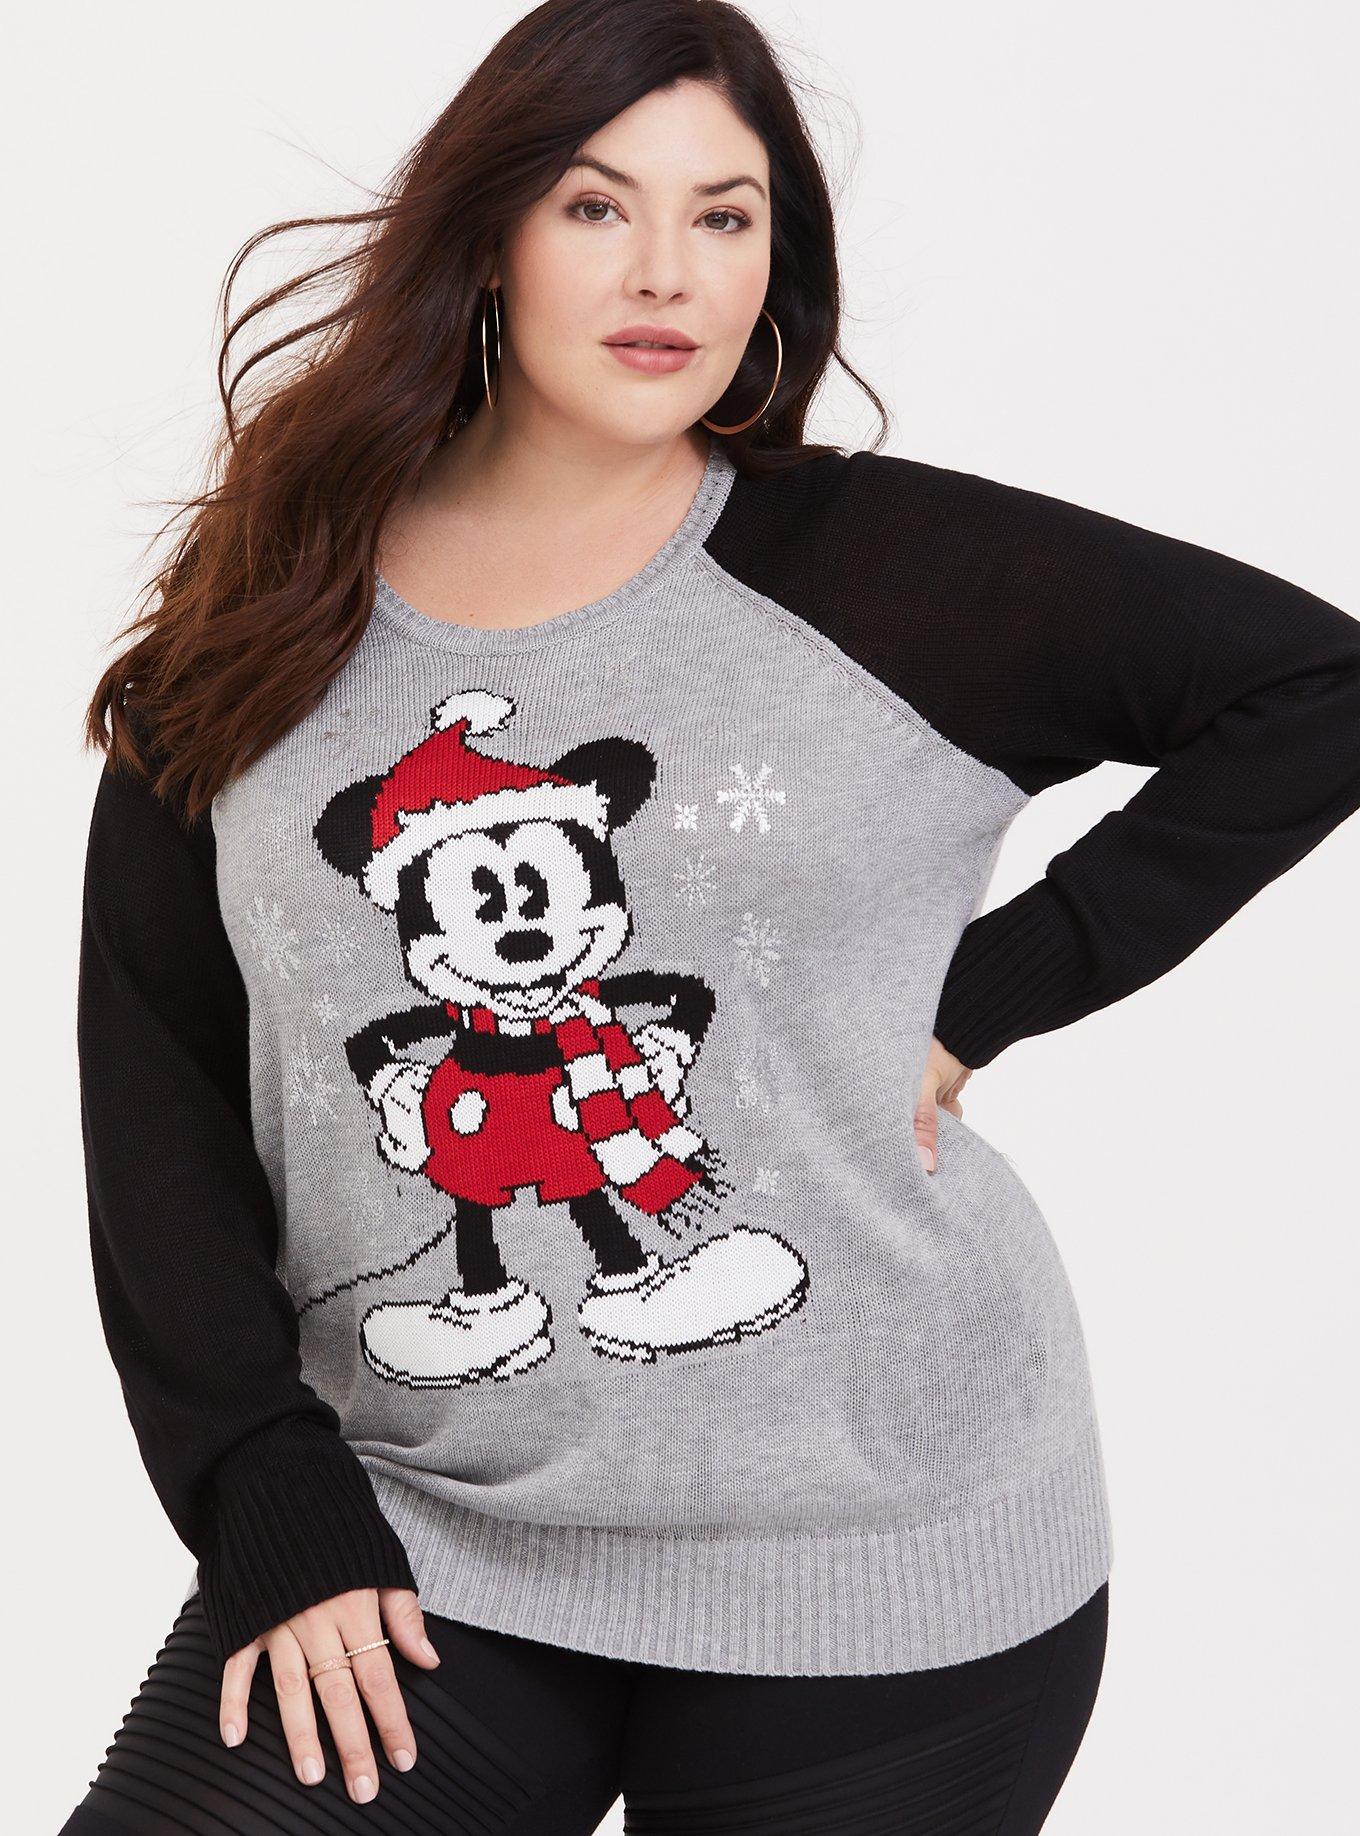 Plus Size - Disney Mickey Mouse Christmas Lights Legging - Torrid